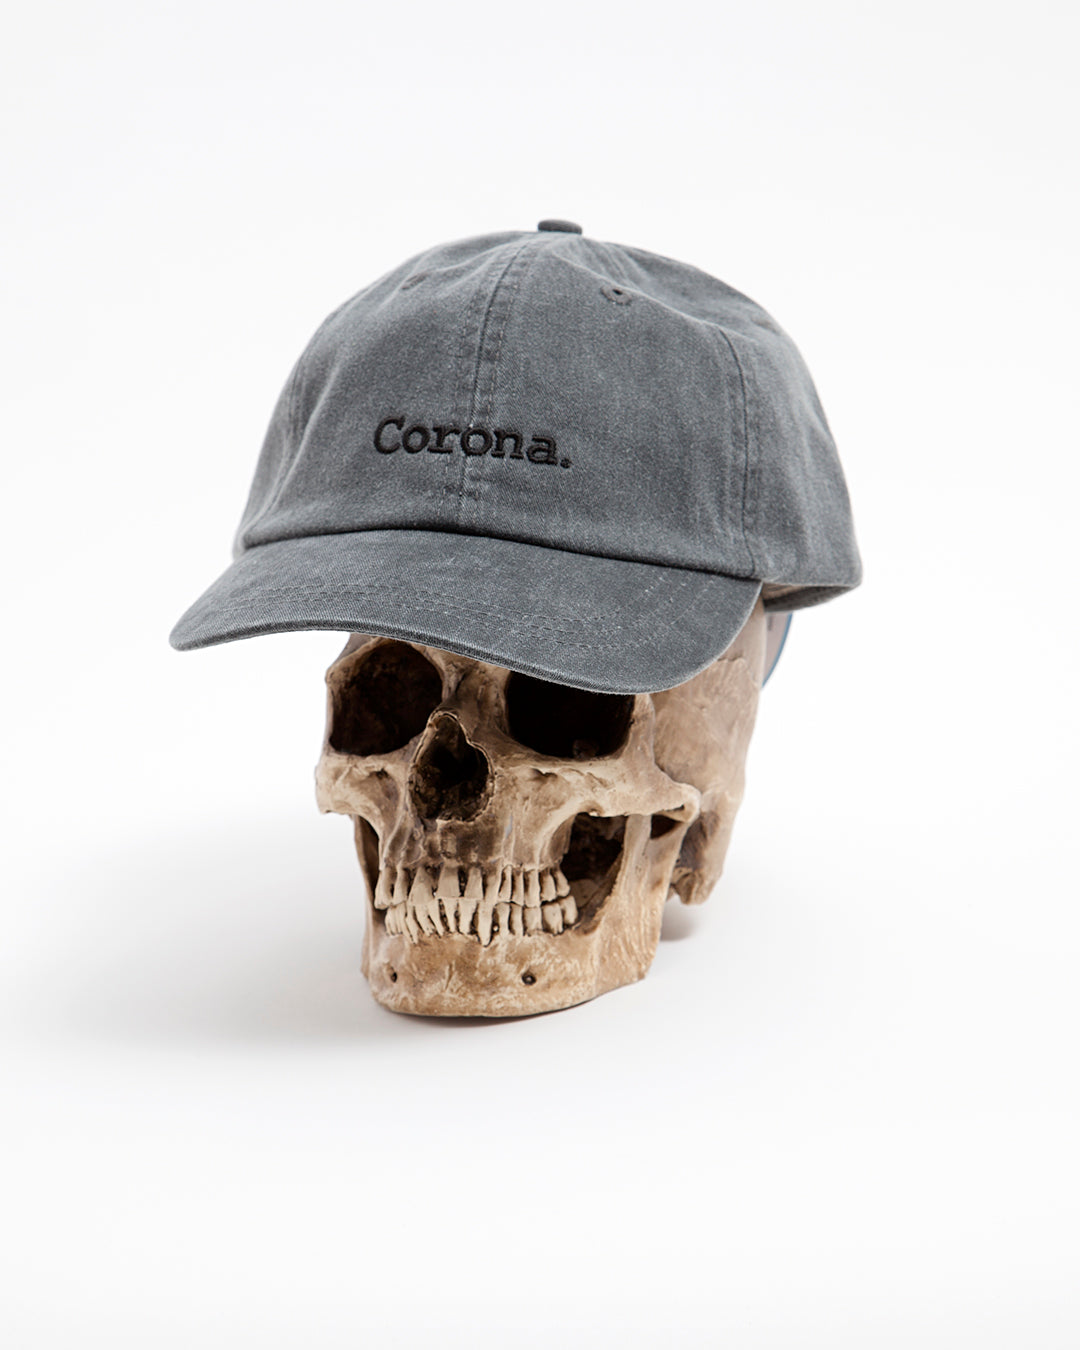 THE CORONA UTILITY・CORONA LOGO EMBROIDERY CAP / Grey × Black Embroidery